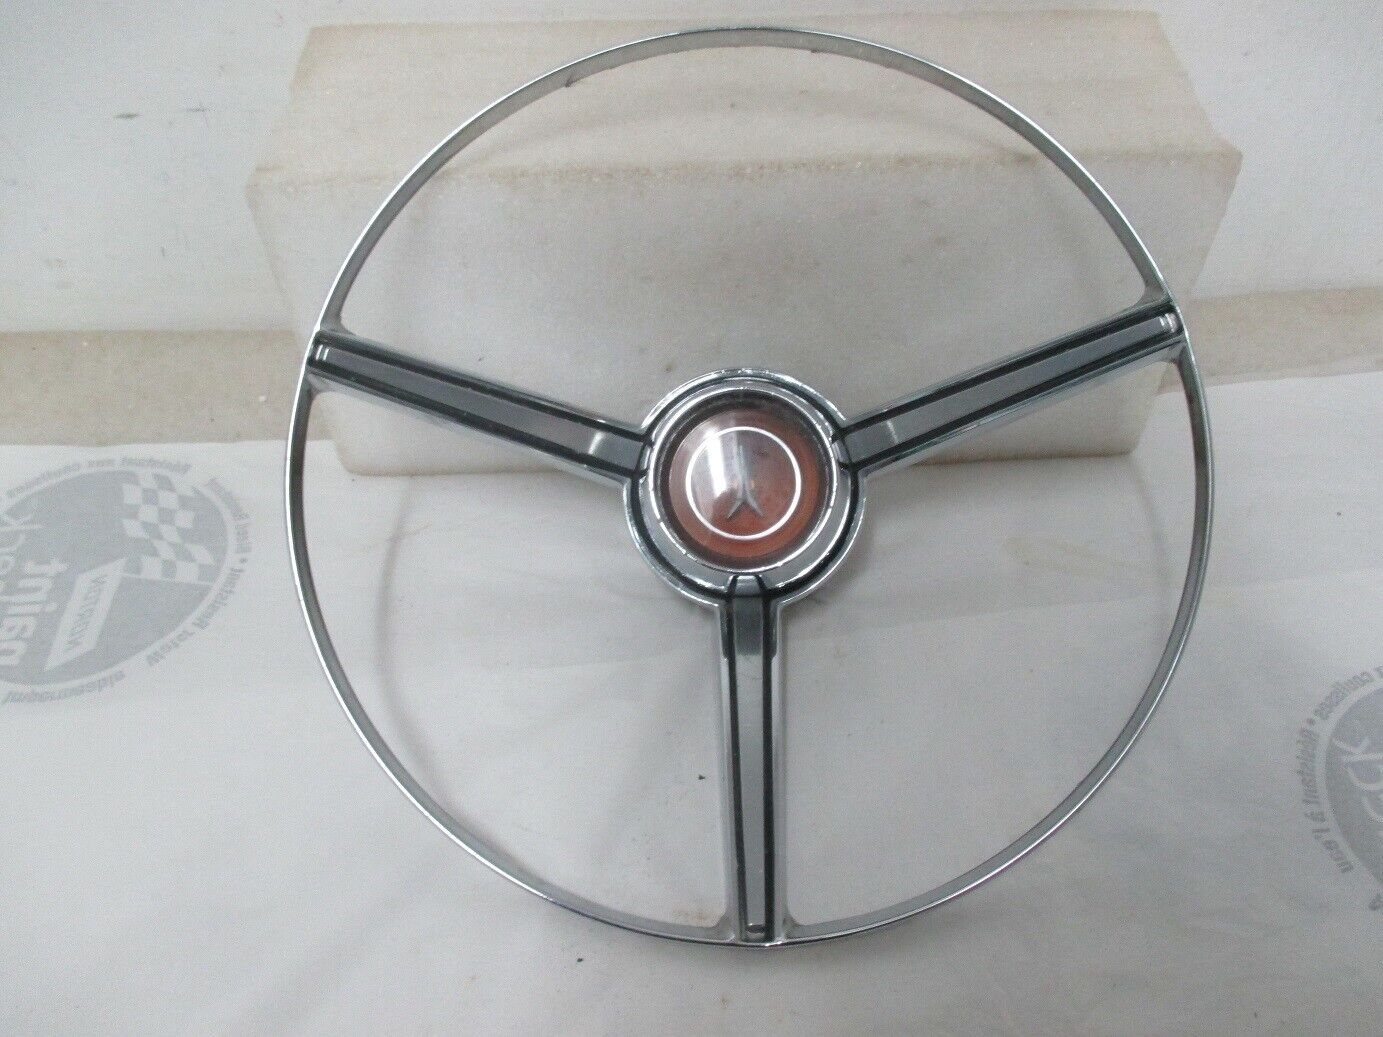 Mopar USED 1966 Plymouth Sport Fury Full Horn Ring with 3 Spoke Wheel 2643689